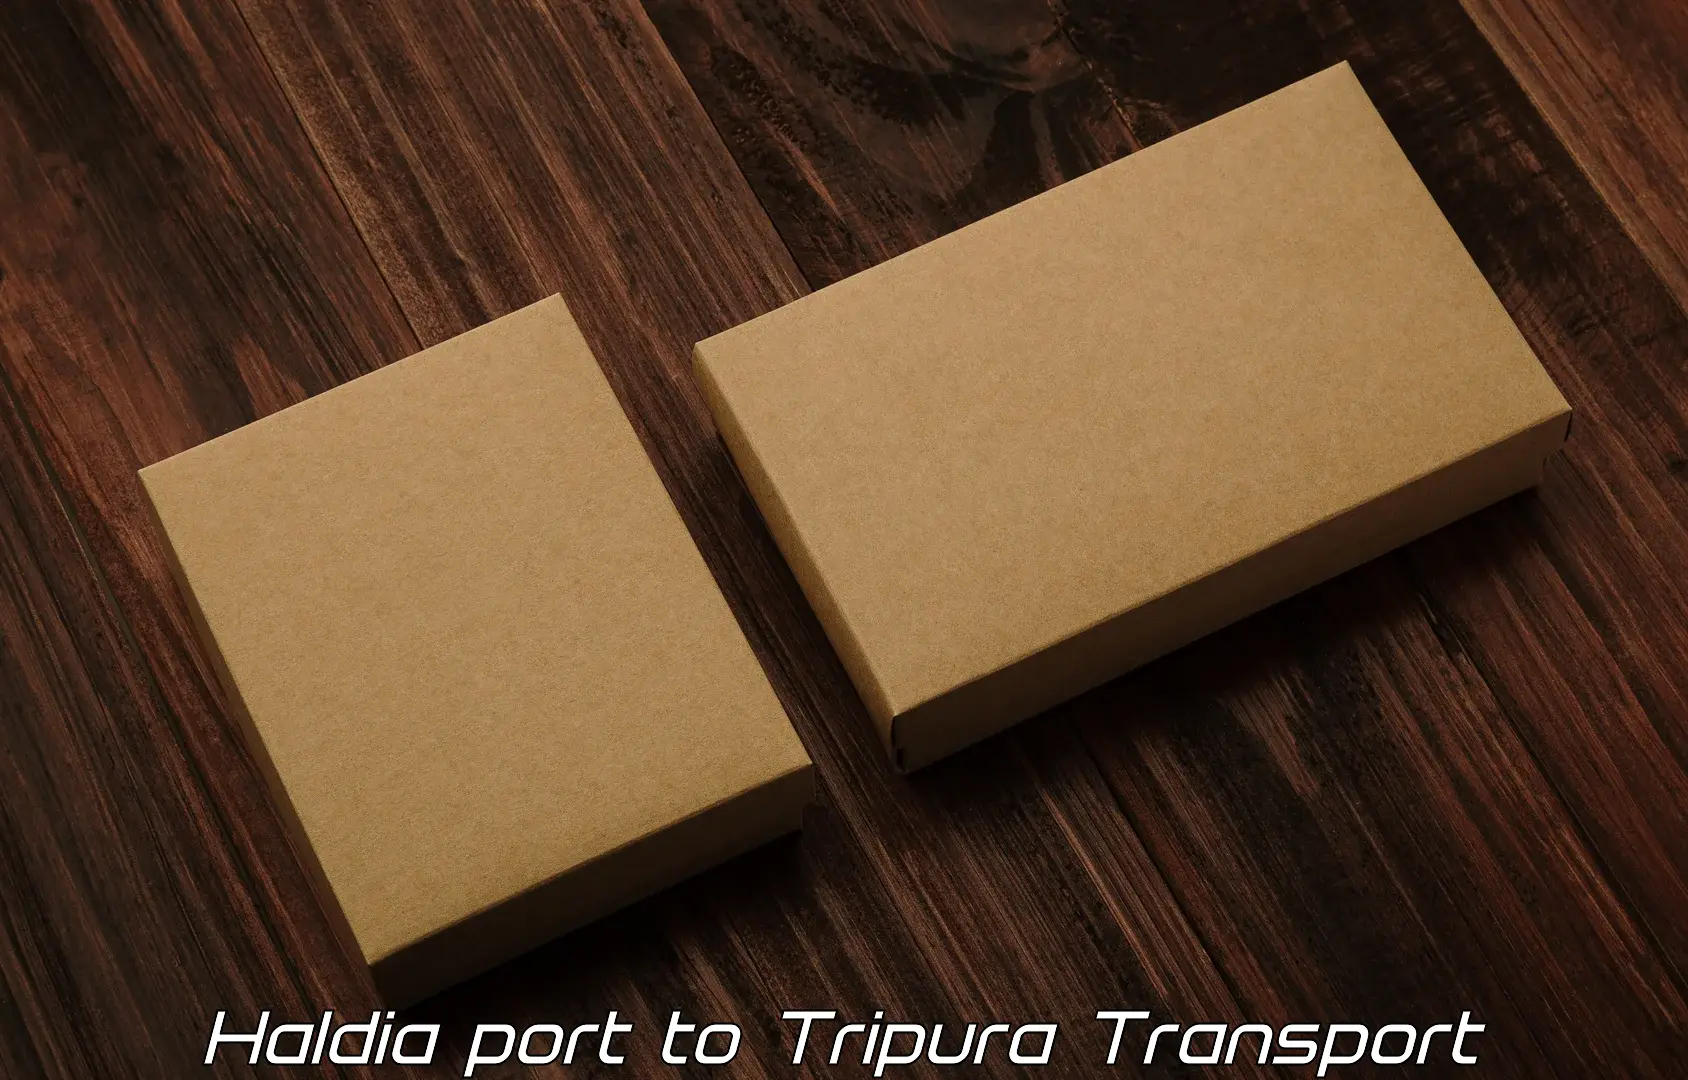 Vehicle parcel service Haldia port to Agartala